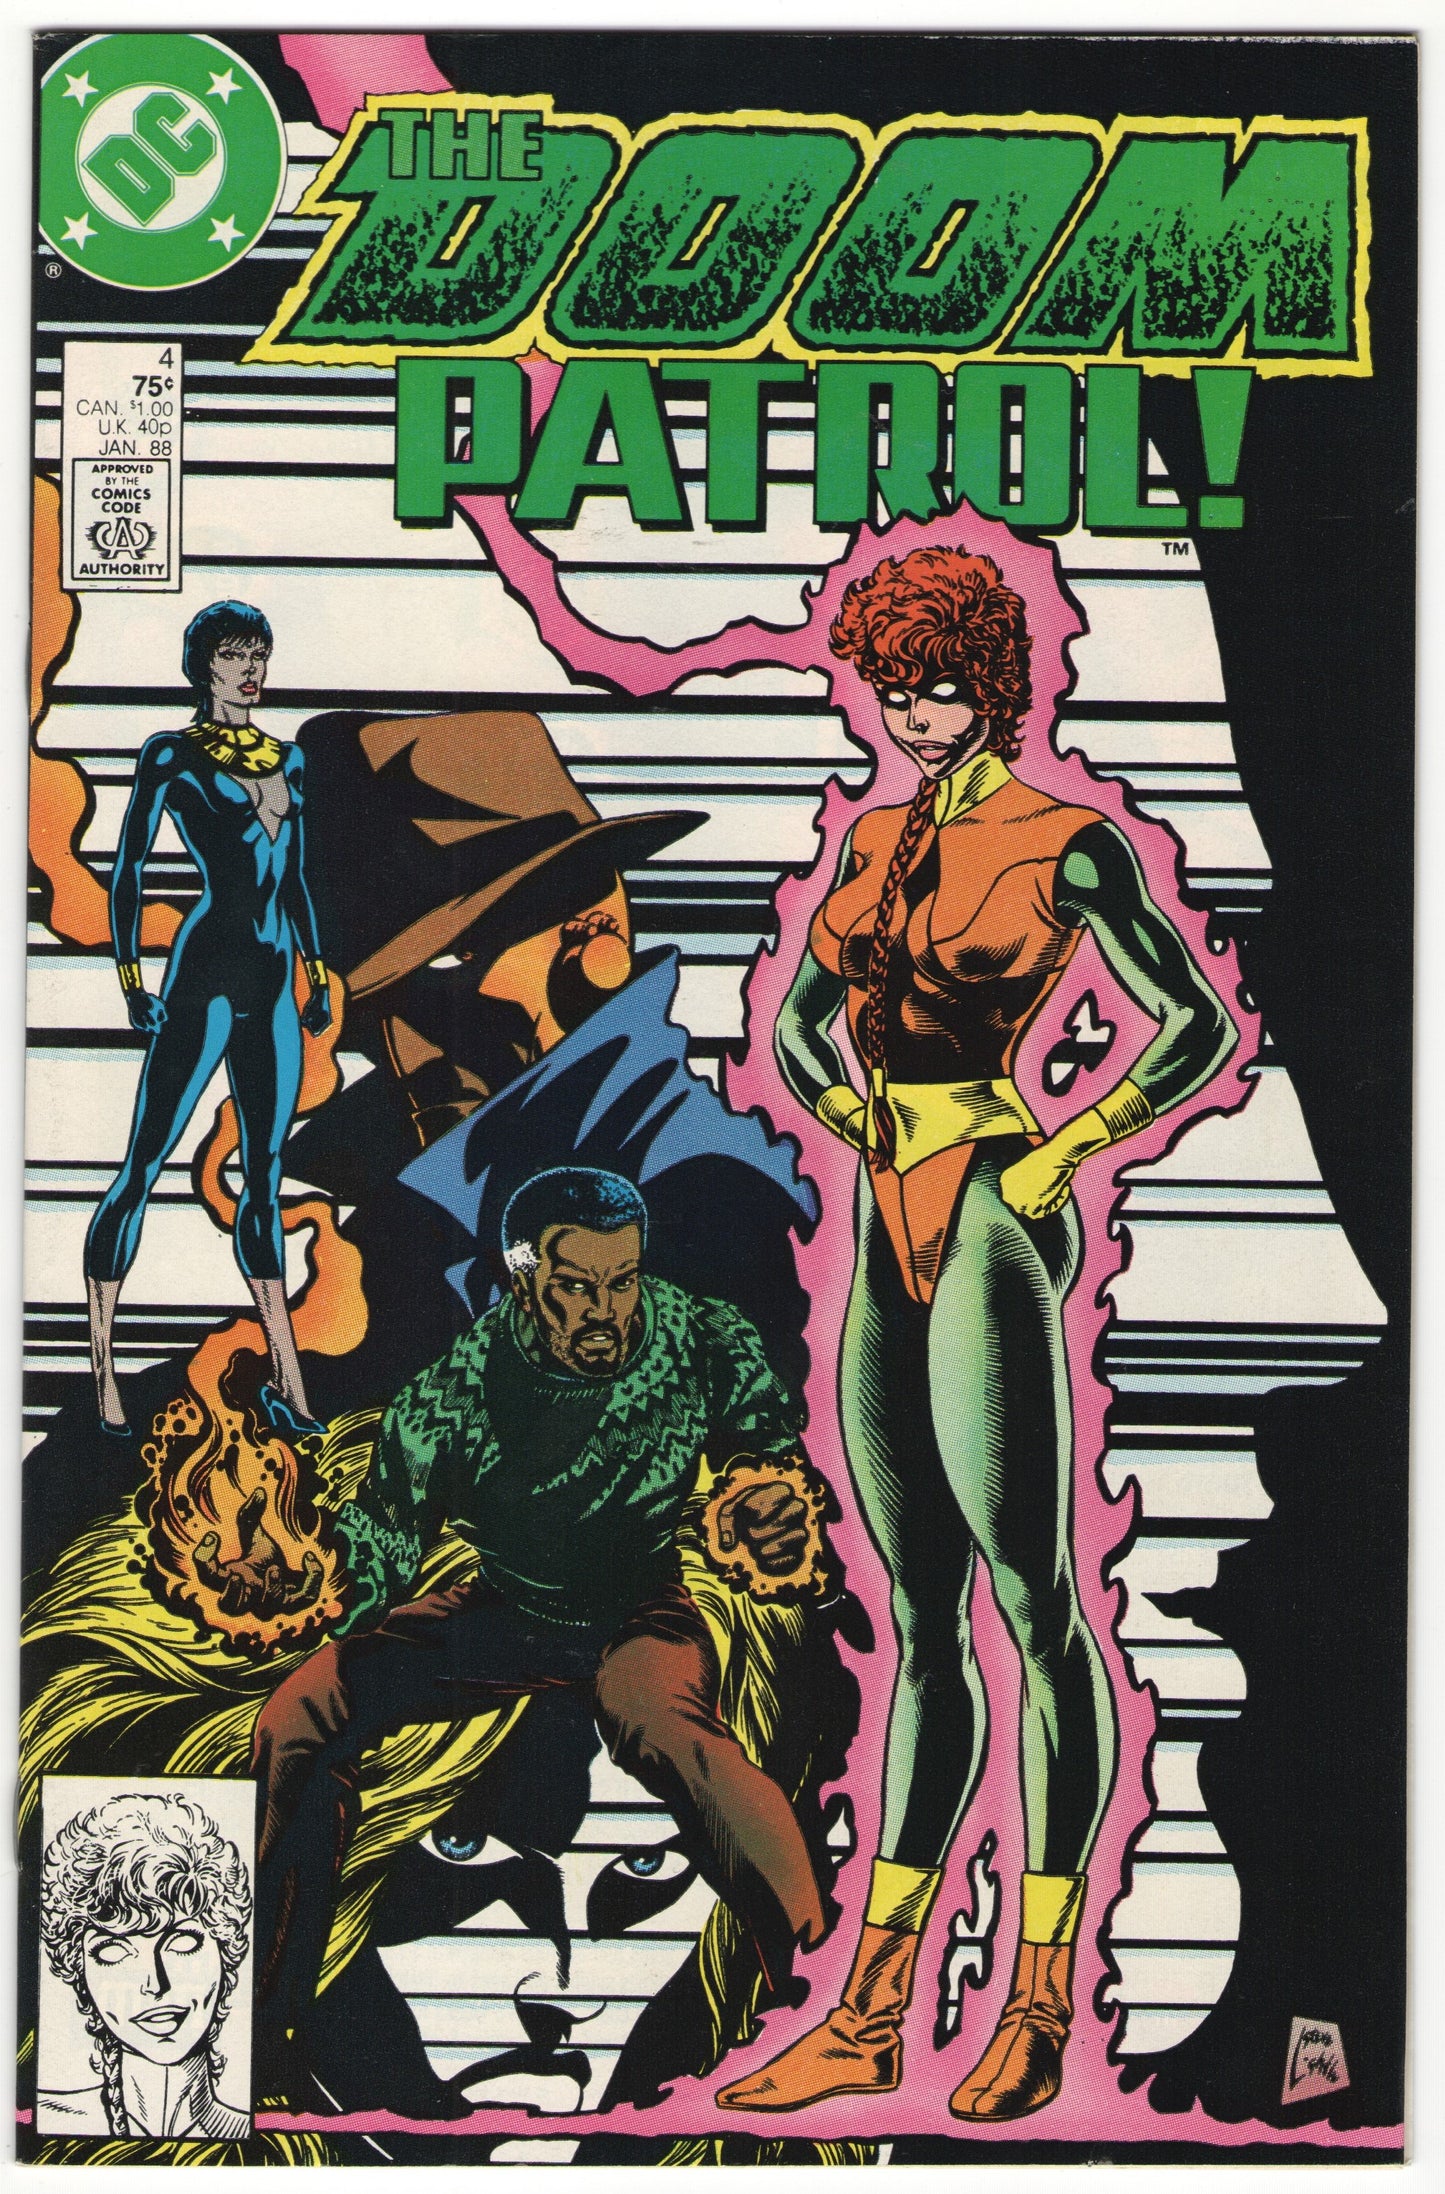 The Doom Patrol (1987-88) Issues 1-5